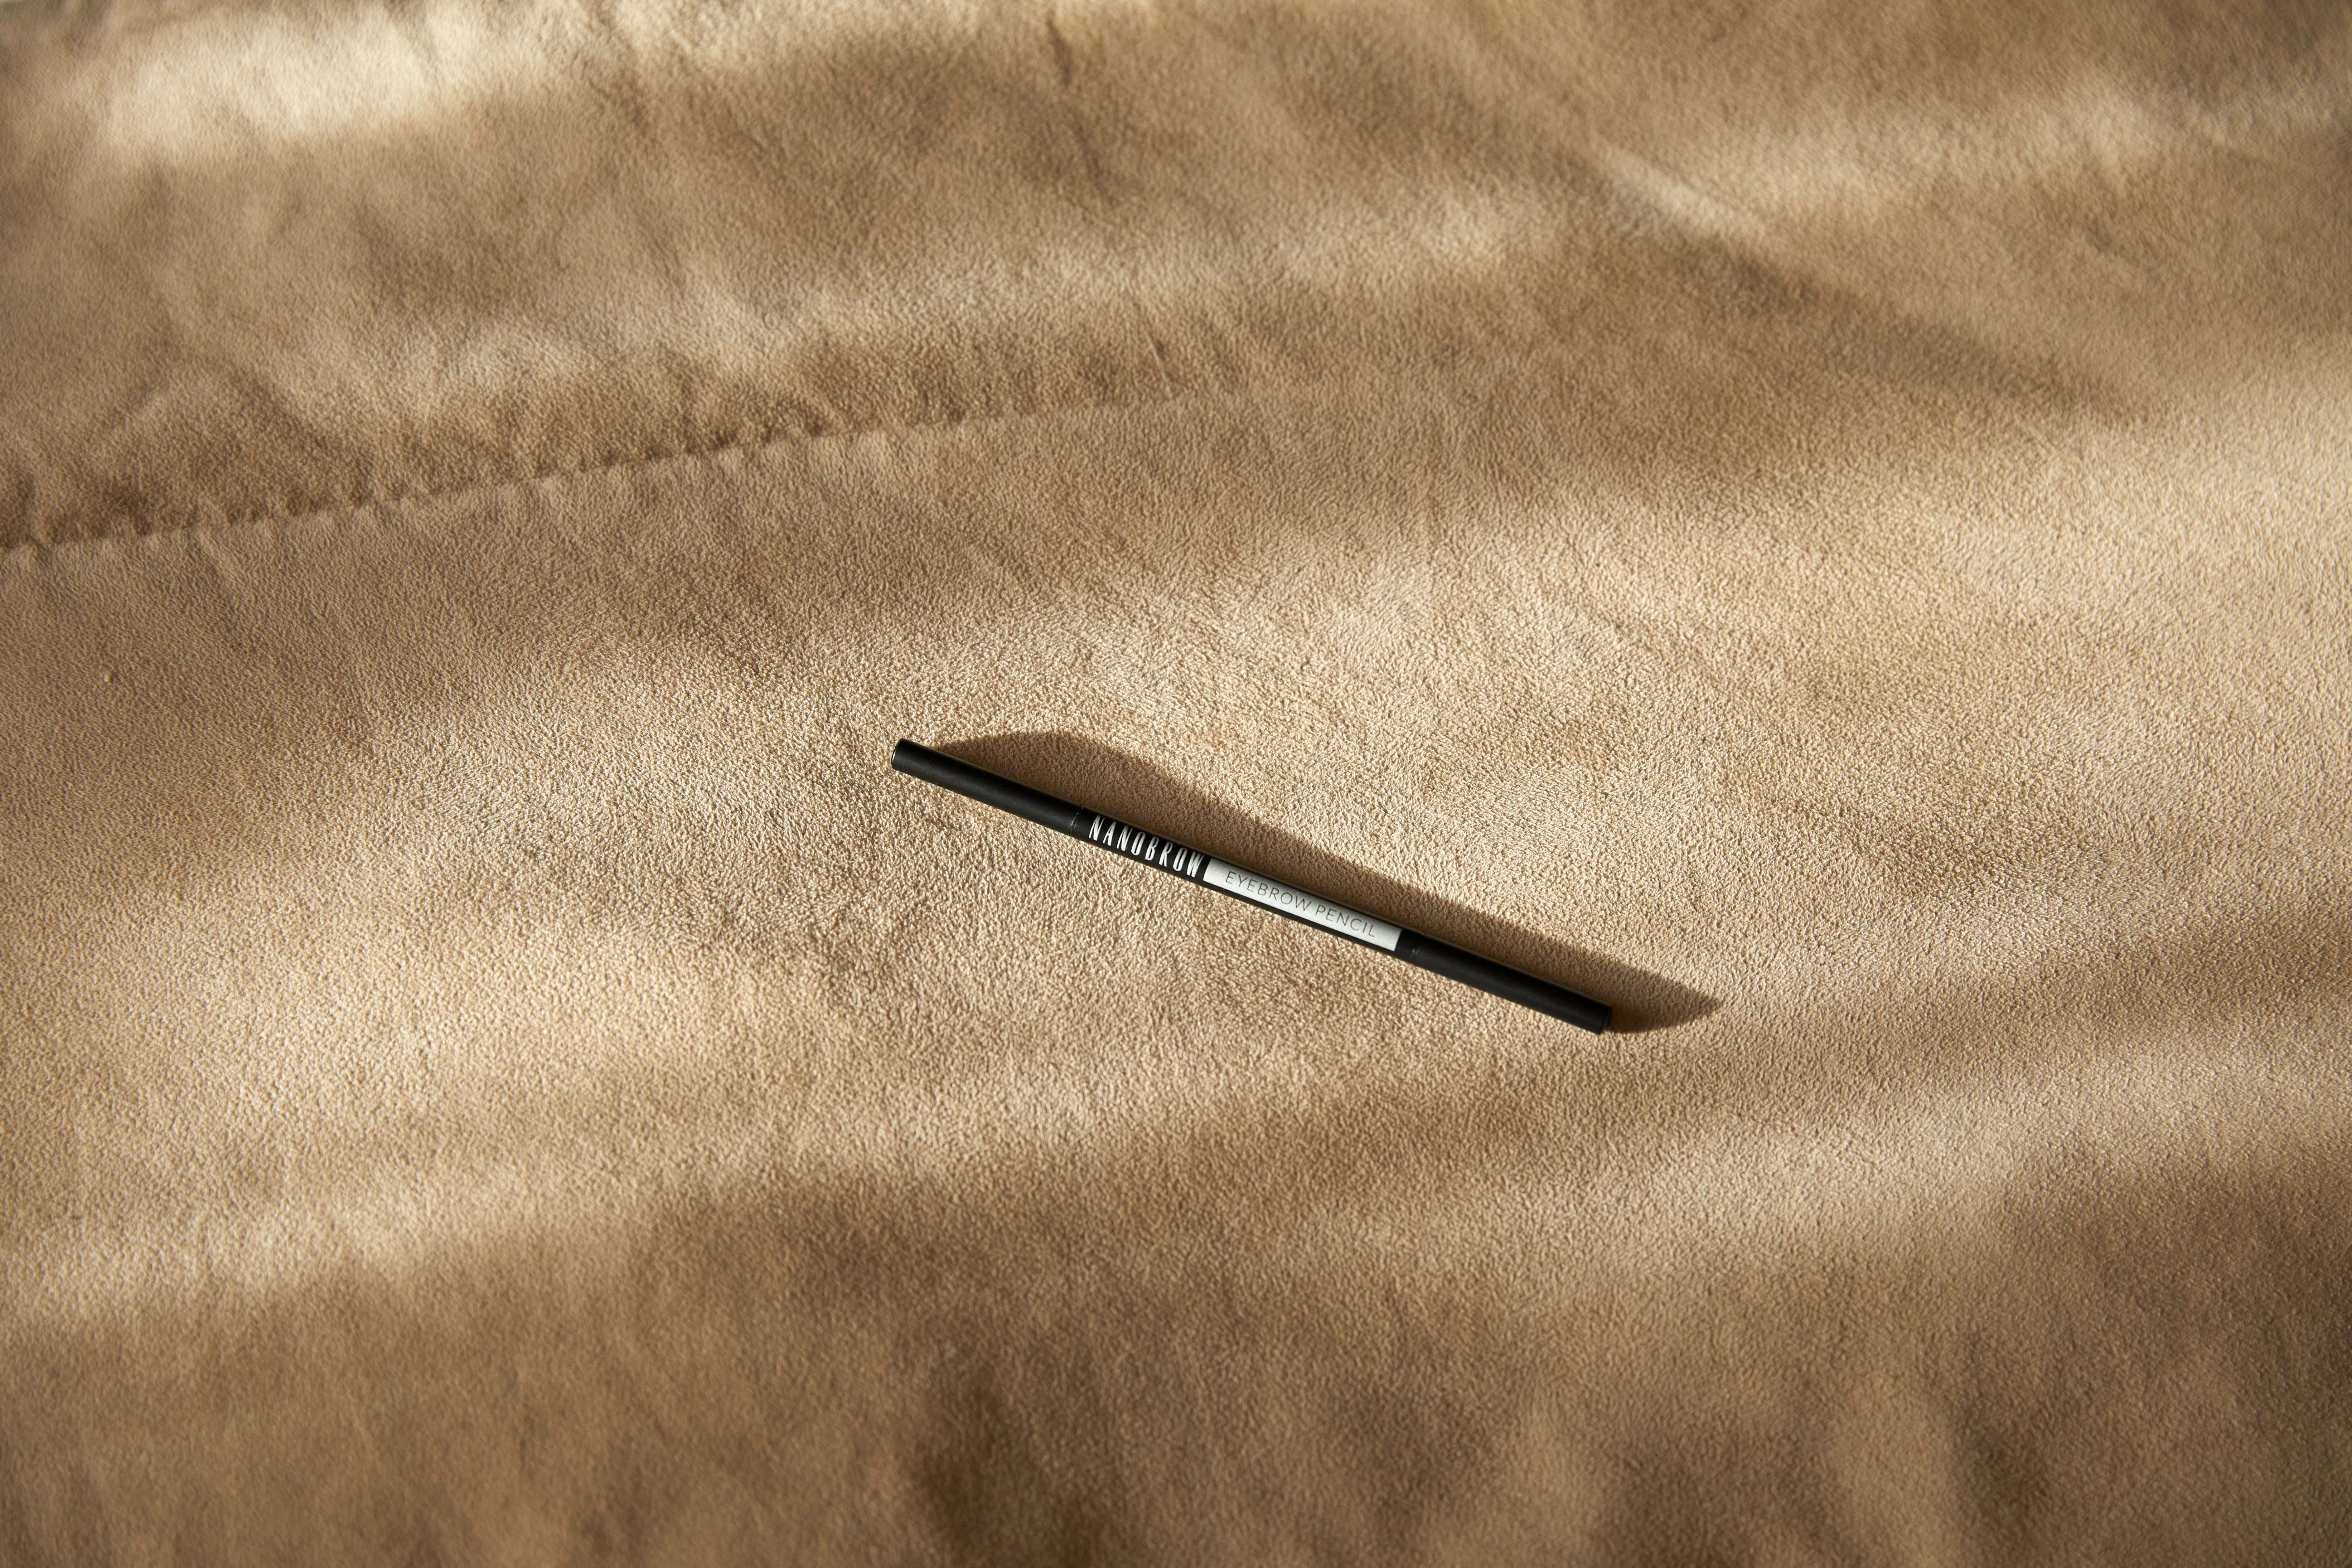 Nanobrow Eyebrow Pencil is terrific! The REVIEW